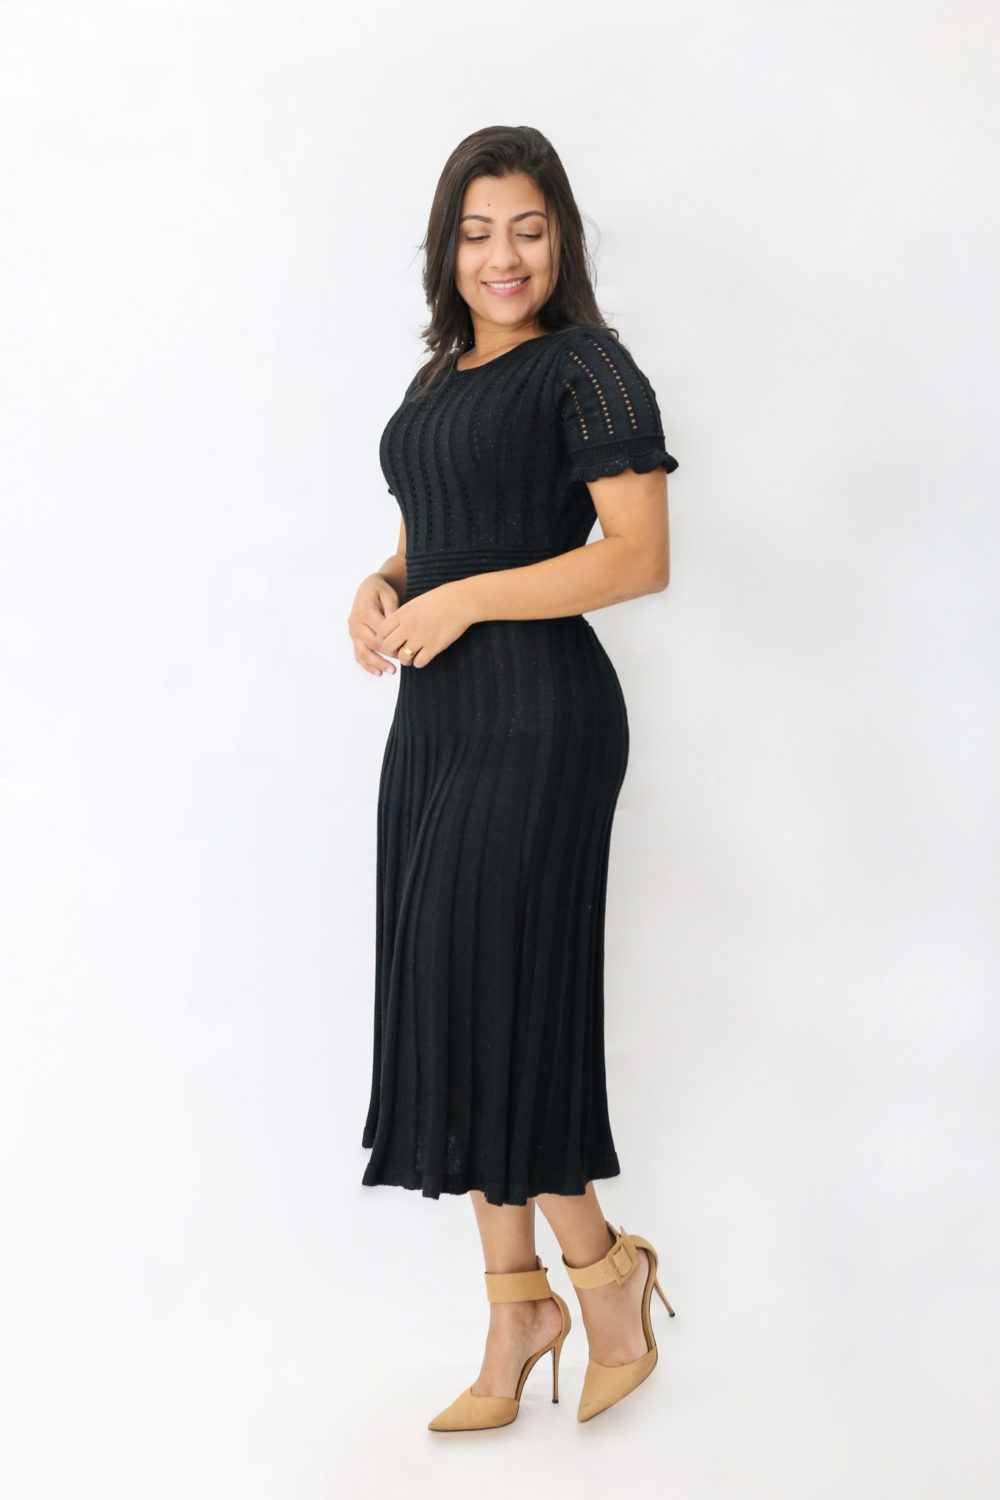 Vestido Tricot Preto Lurex em Áquila Tauheny Store | Moda Evangélica